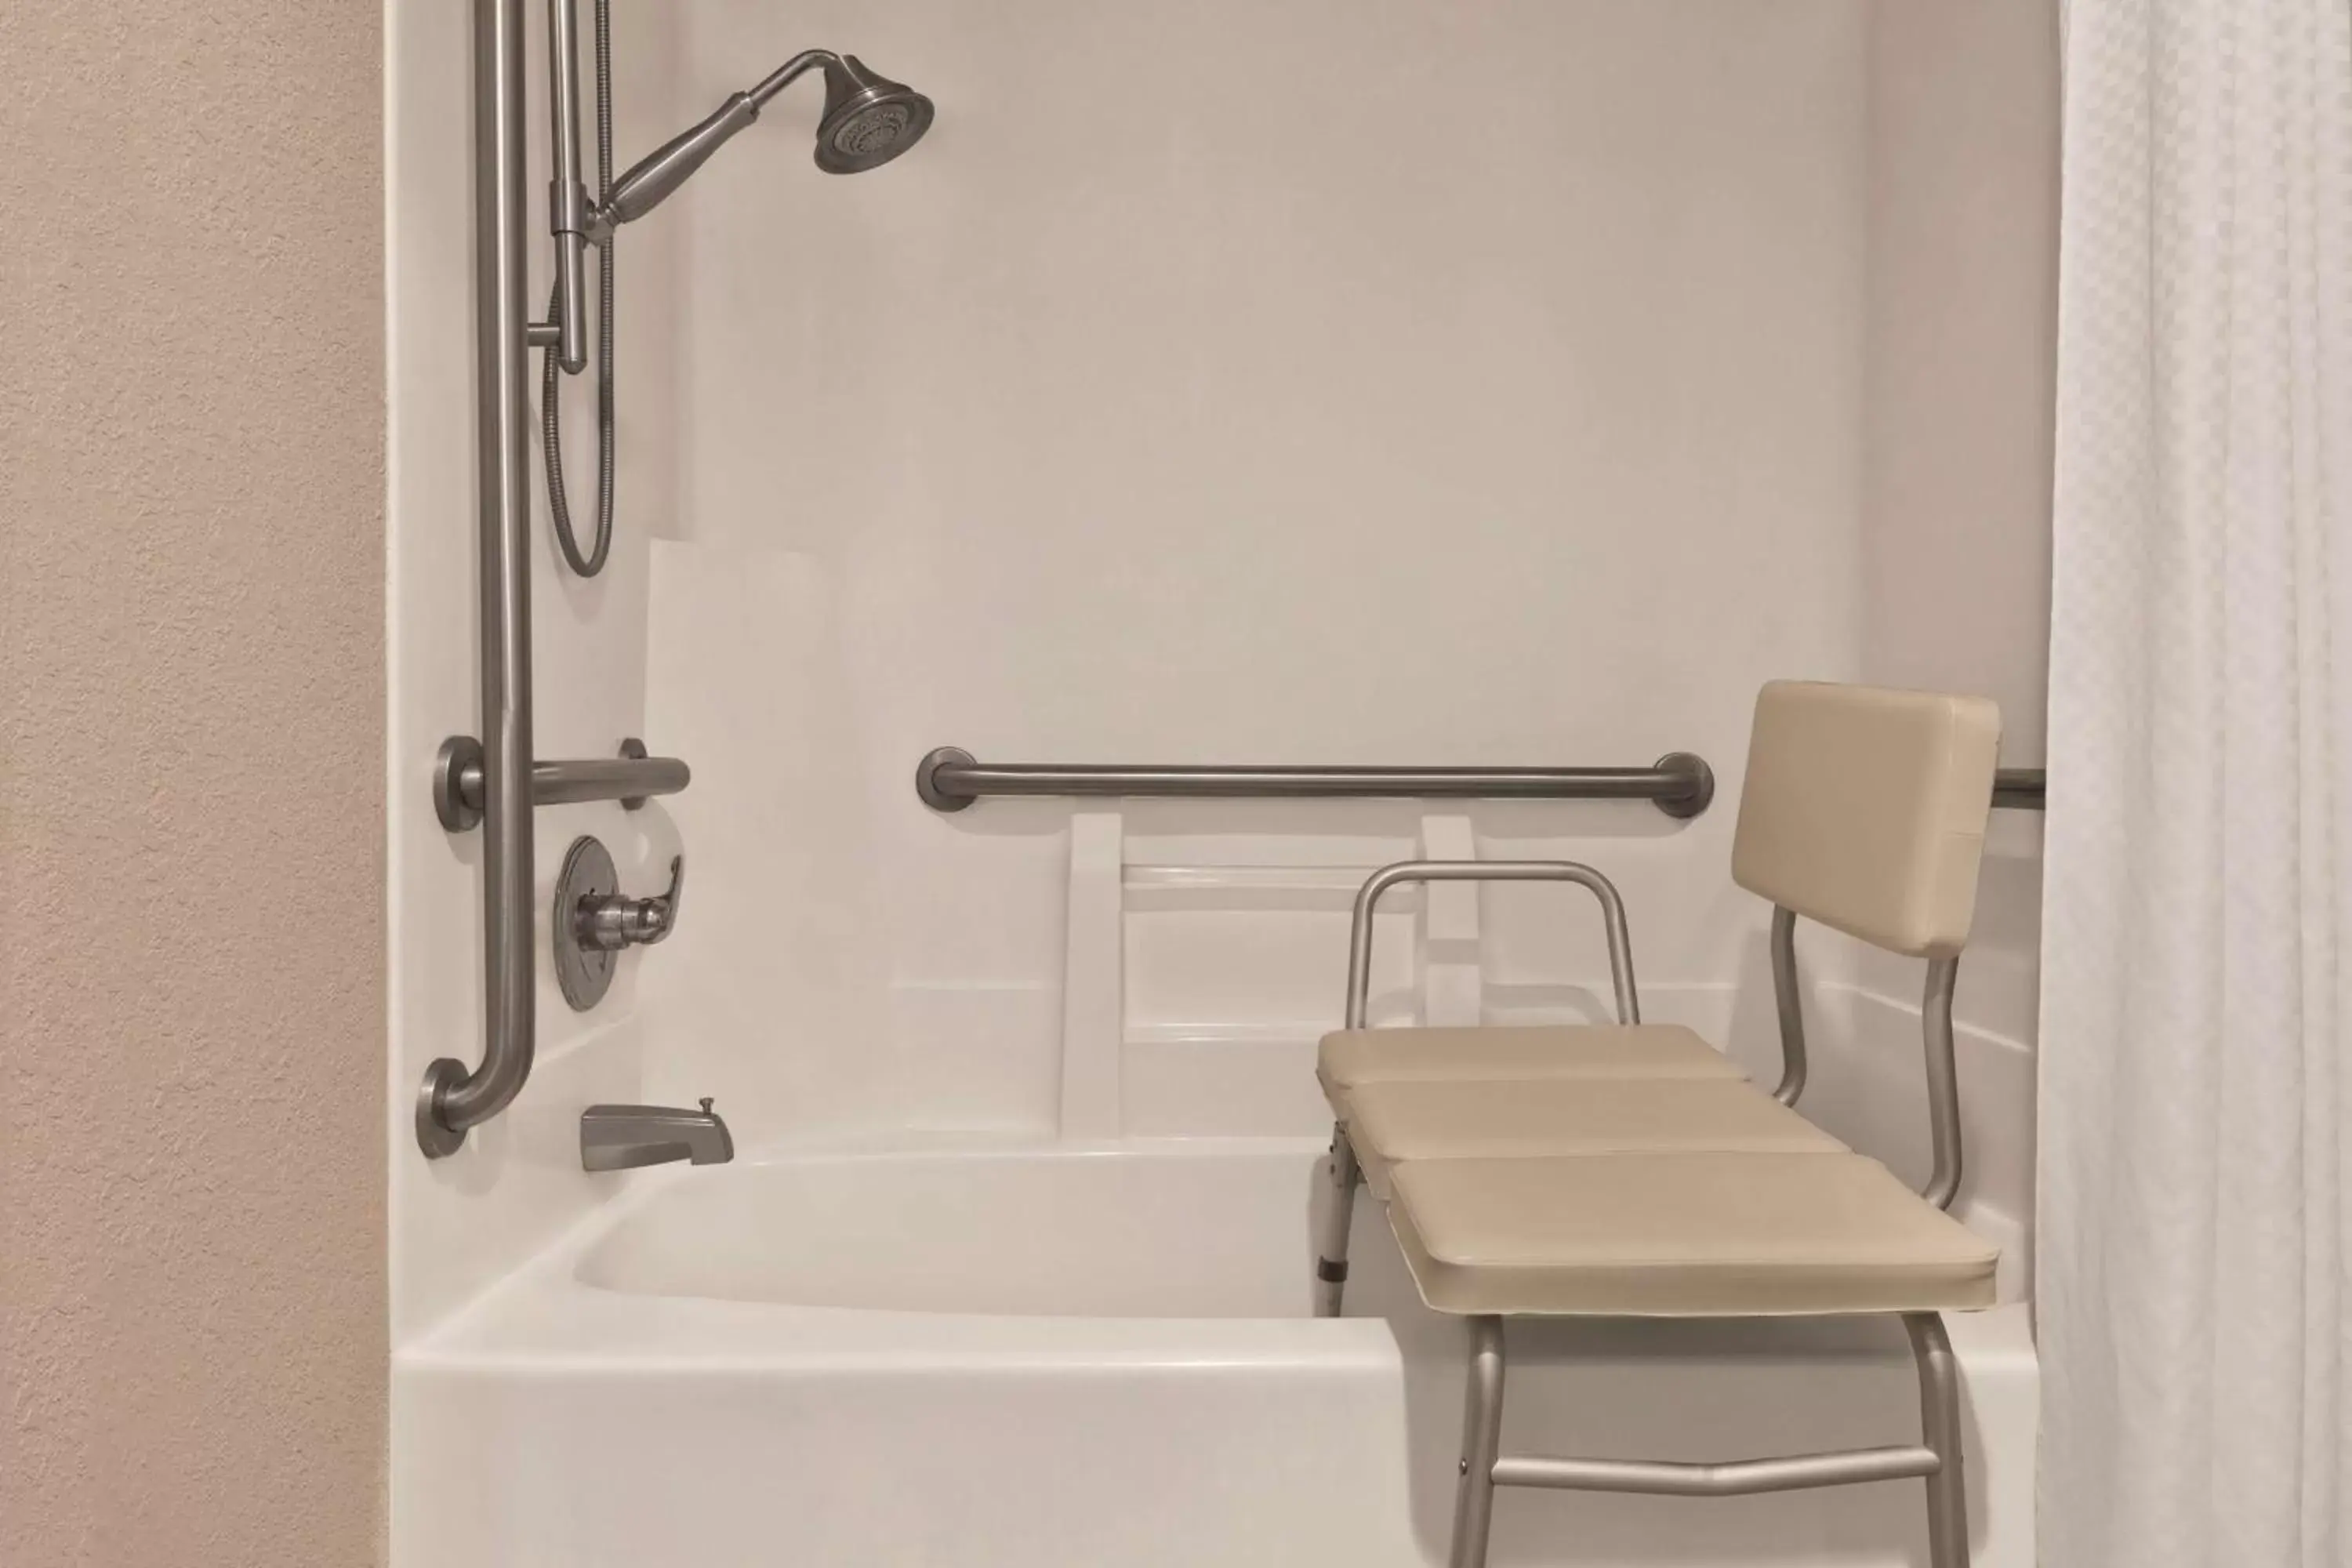 Bathroom in Country Inn & Suites by Radisson, Auburn, IN